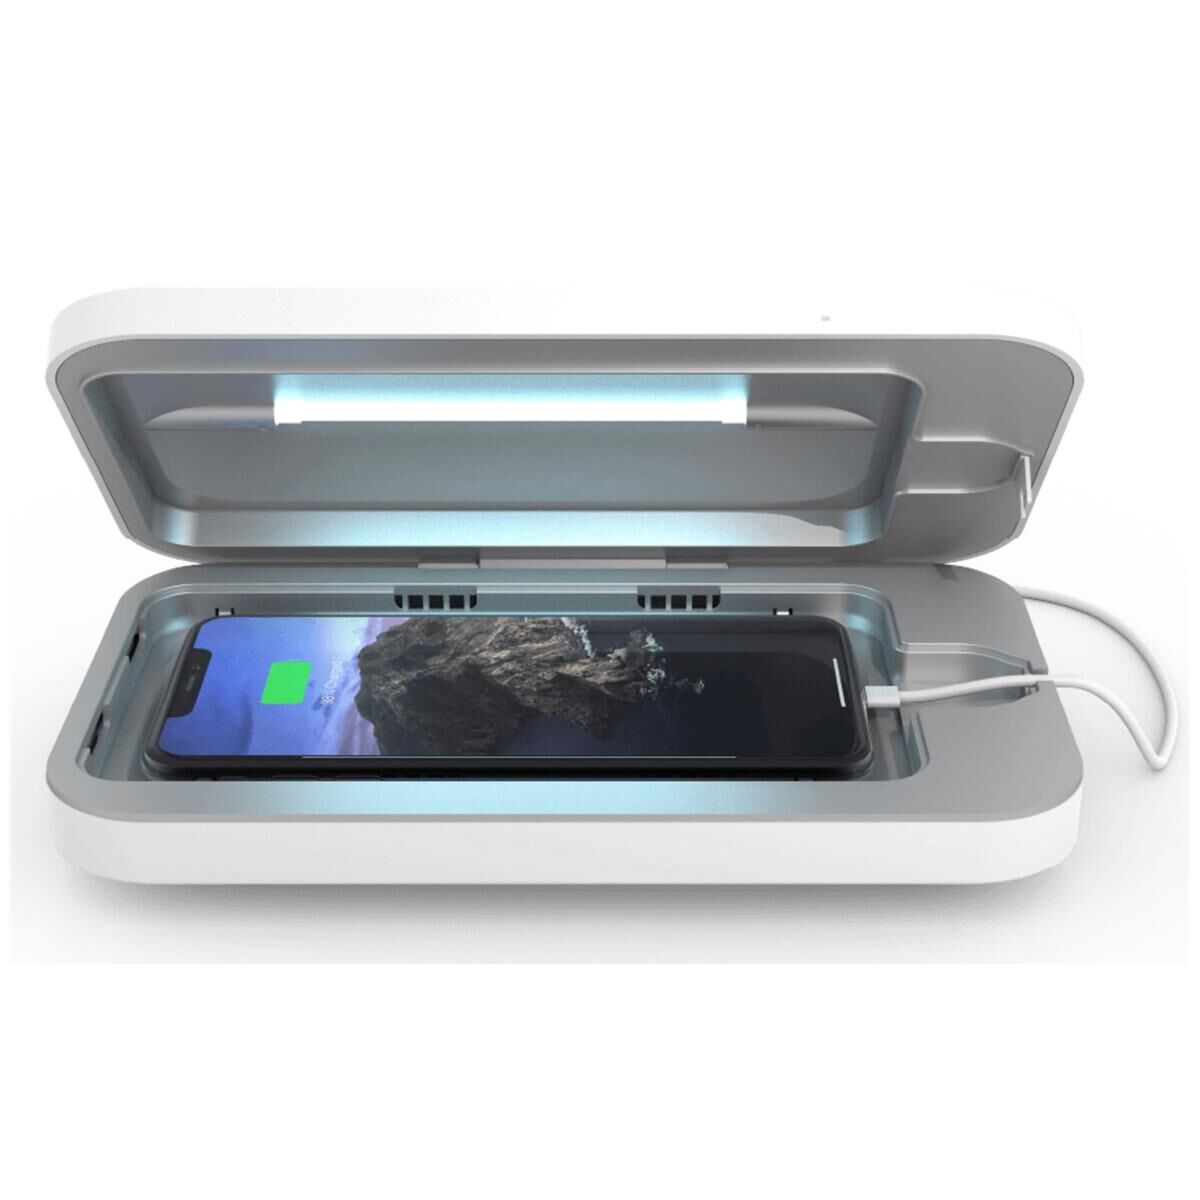 OtterBox PhoneSoap 3 UV Sanitizer for Smartphones, White